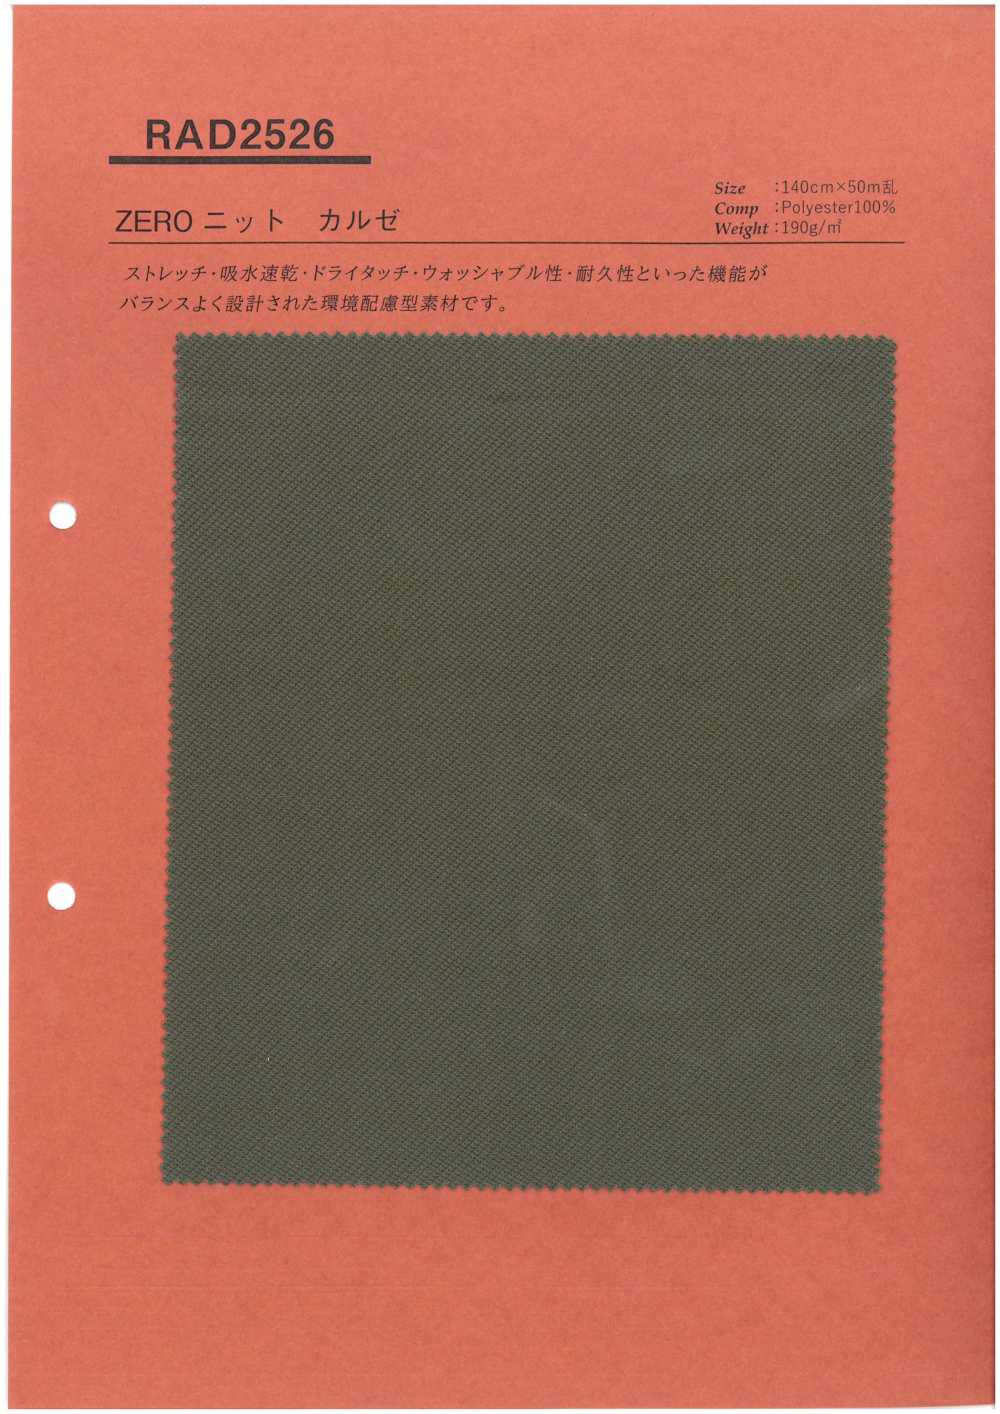 RAD2526 Sustenza® ZERO Kersey[Textile / Fabric] Takato